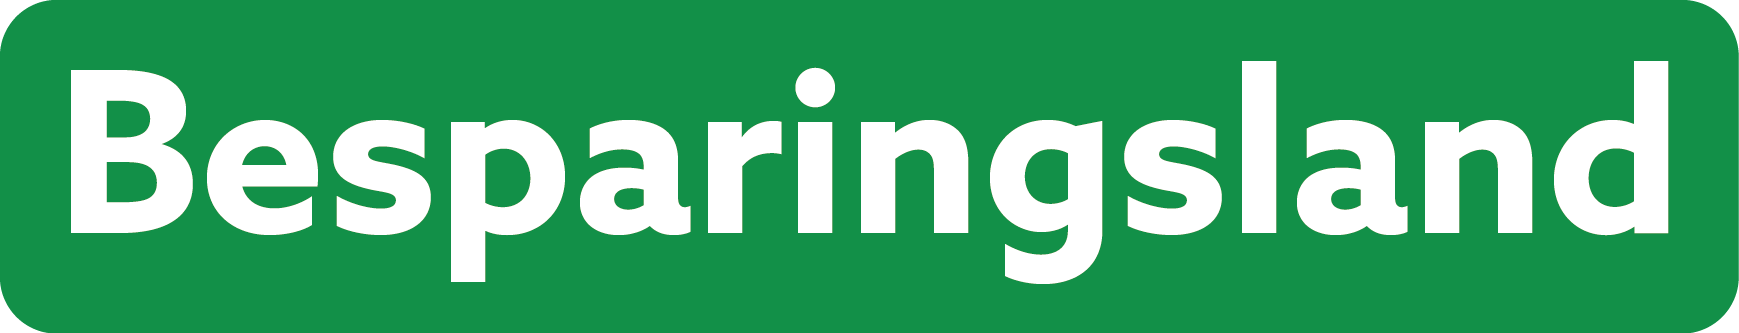 Besparingsland logo